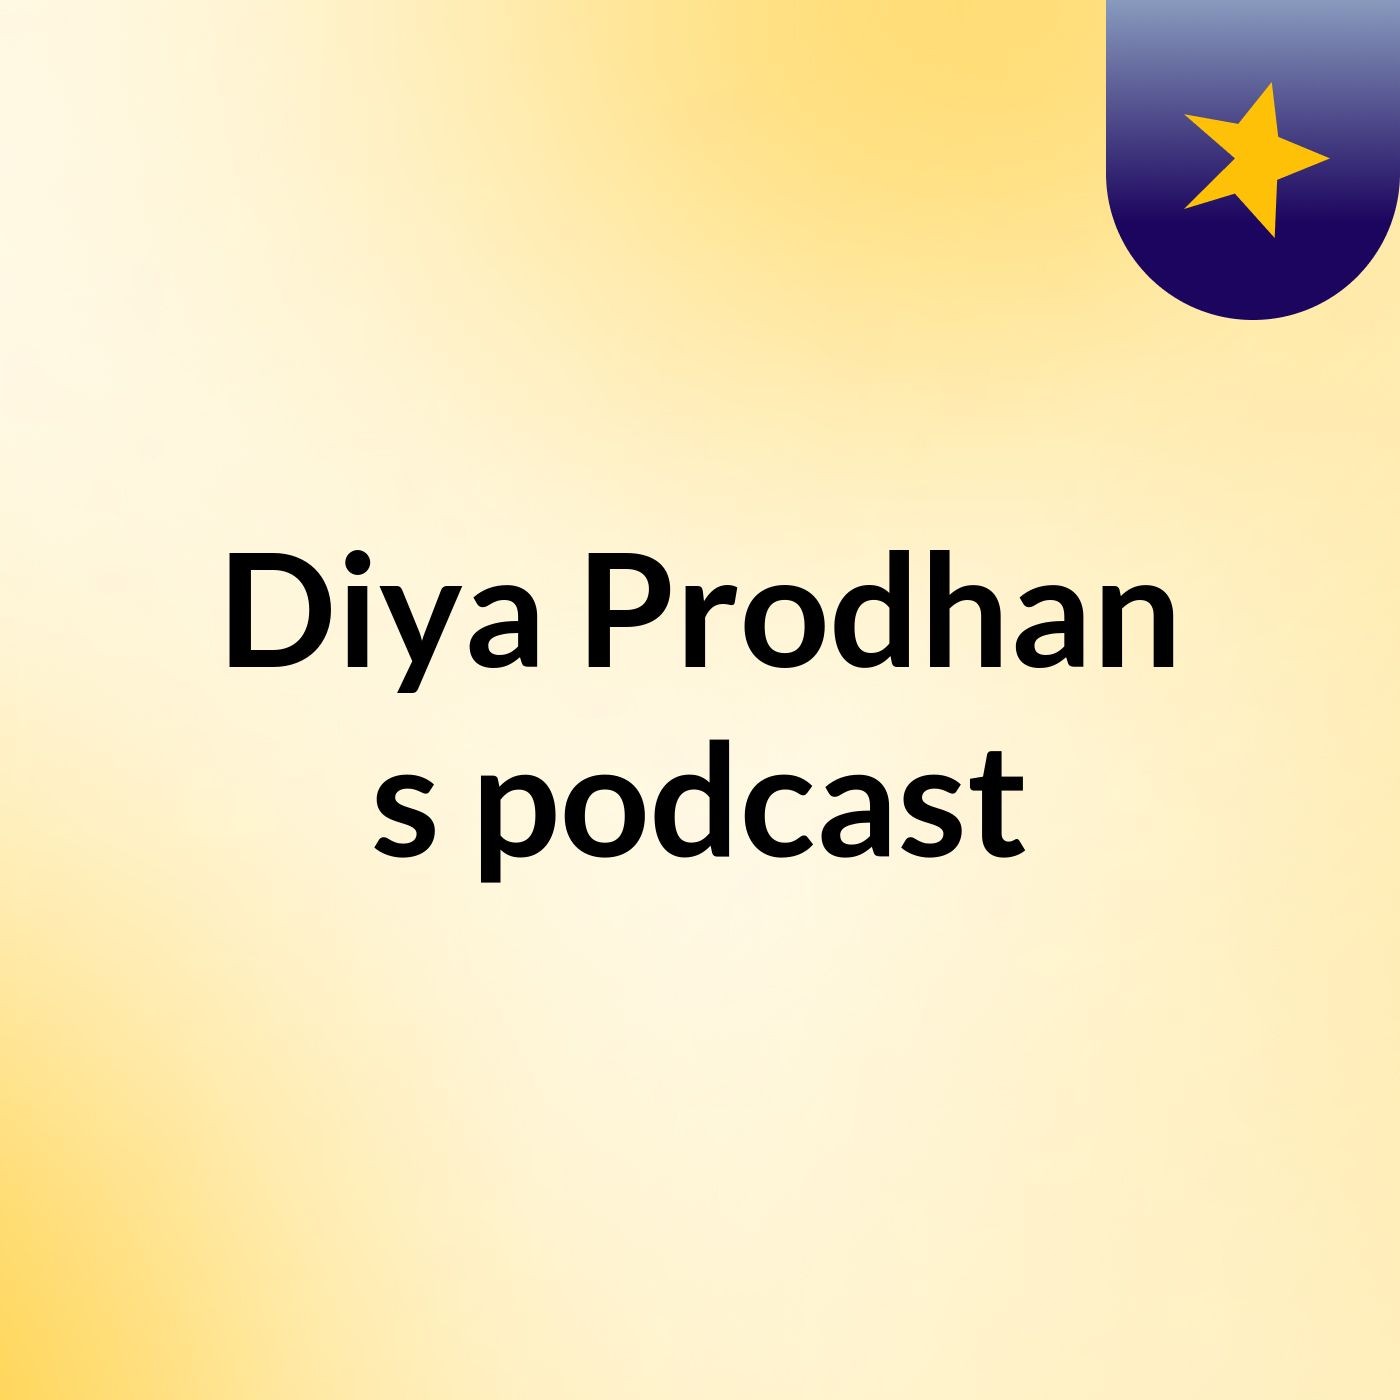 Diya Prodhan's podcast